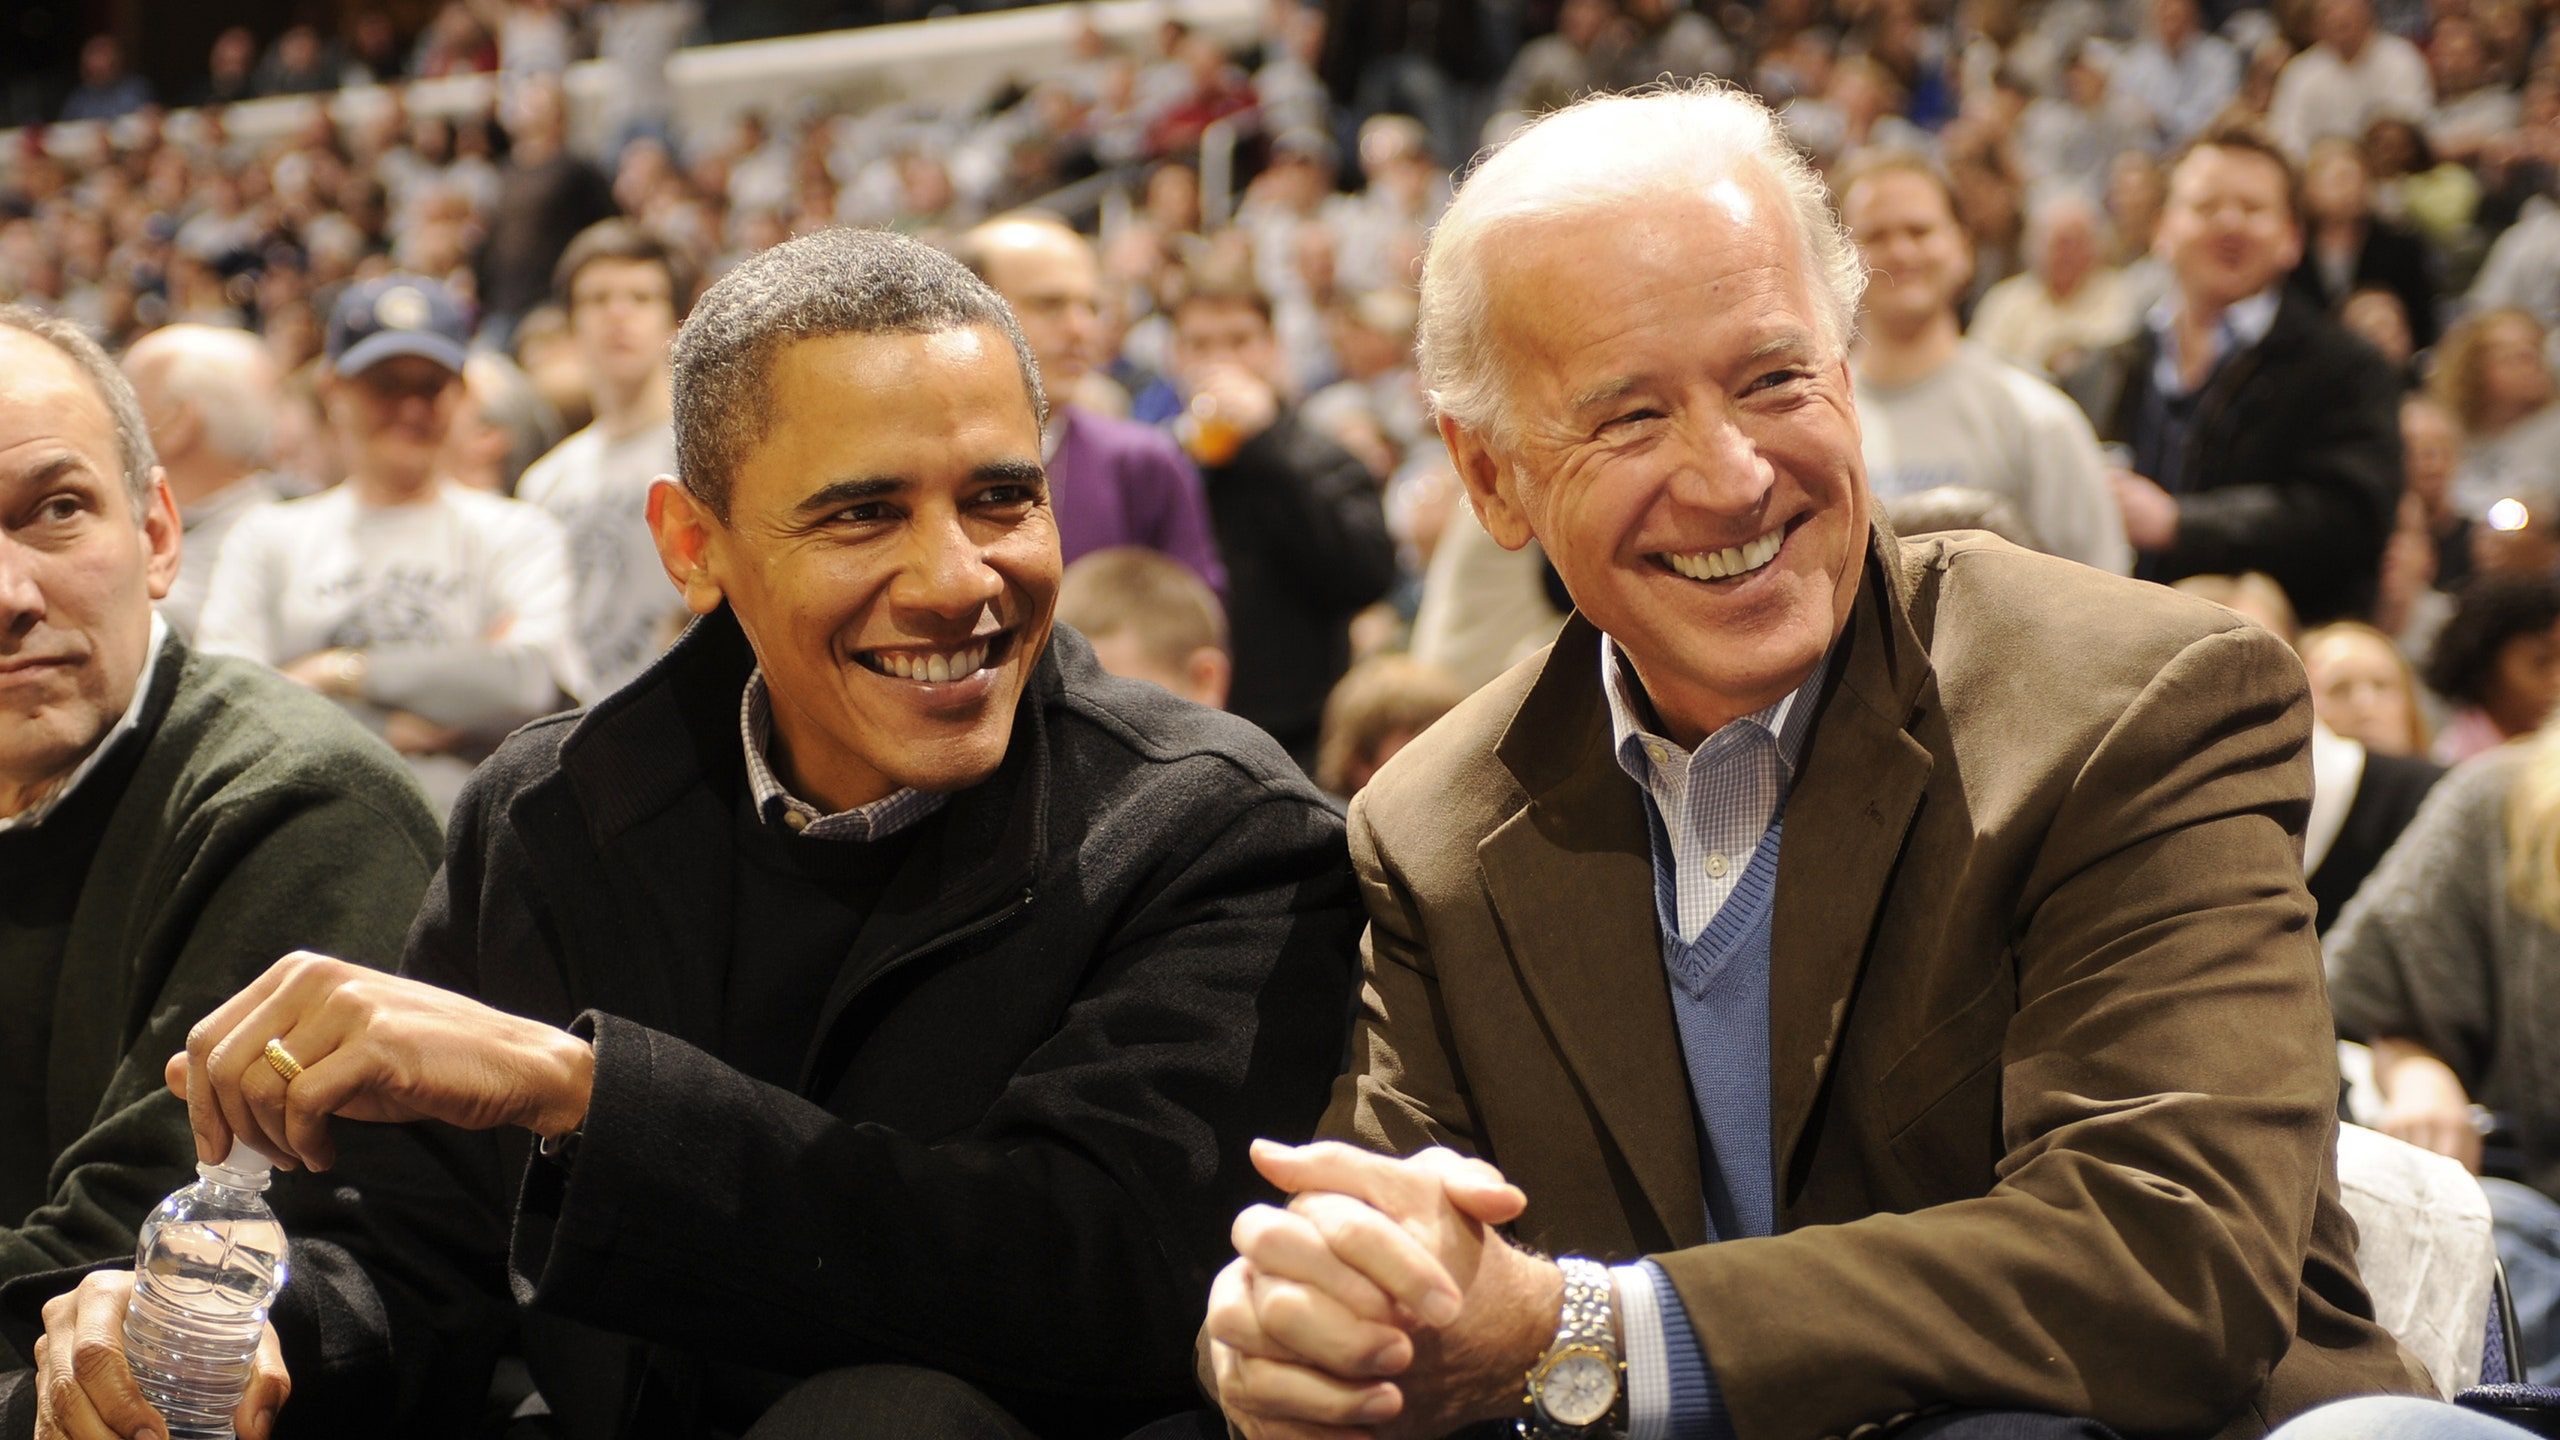 Don't Worry, Barack Obama and Joe Biden Are Still Best Friends